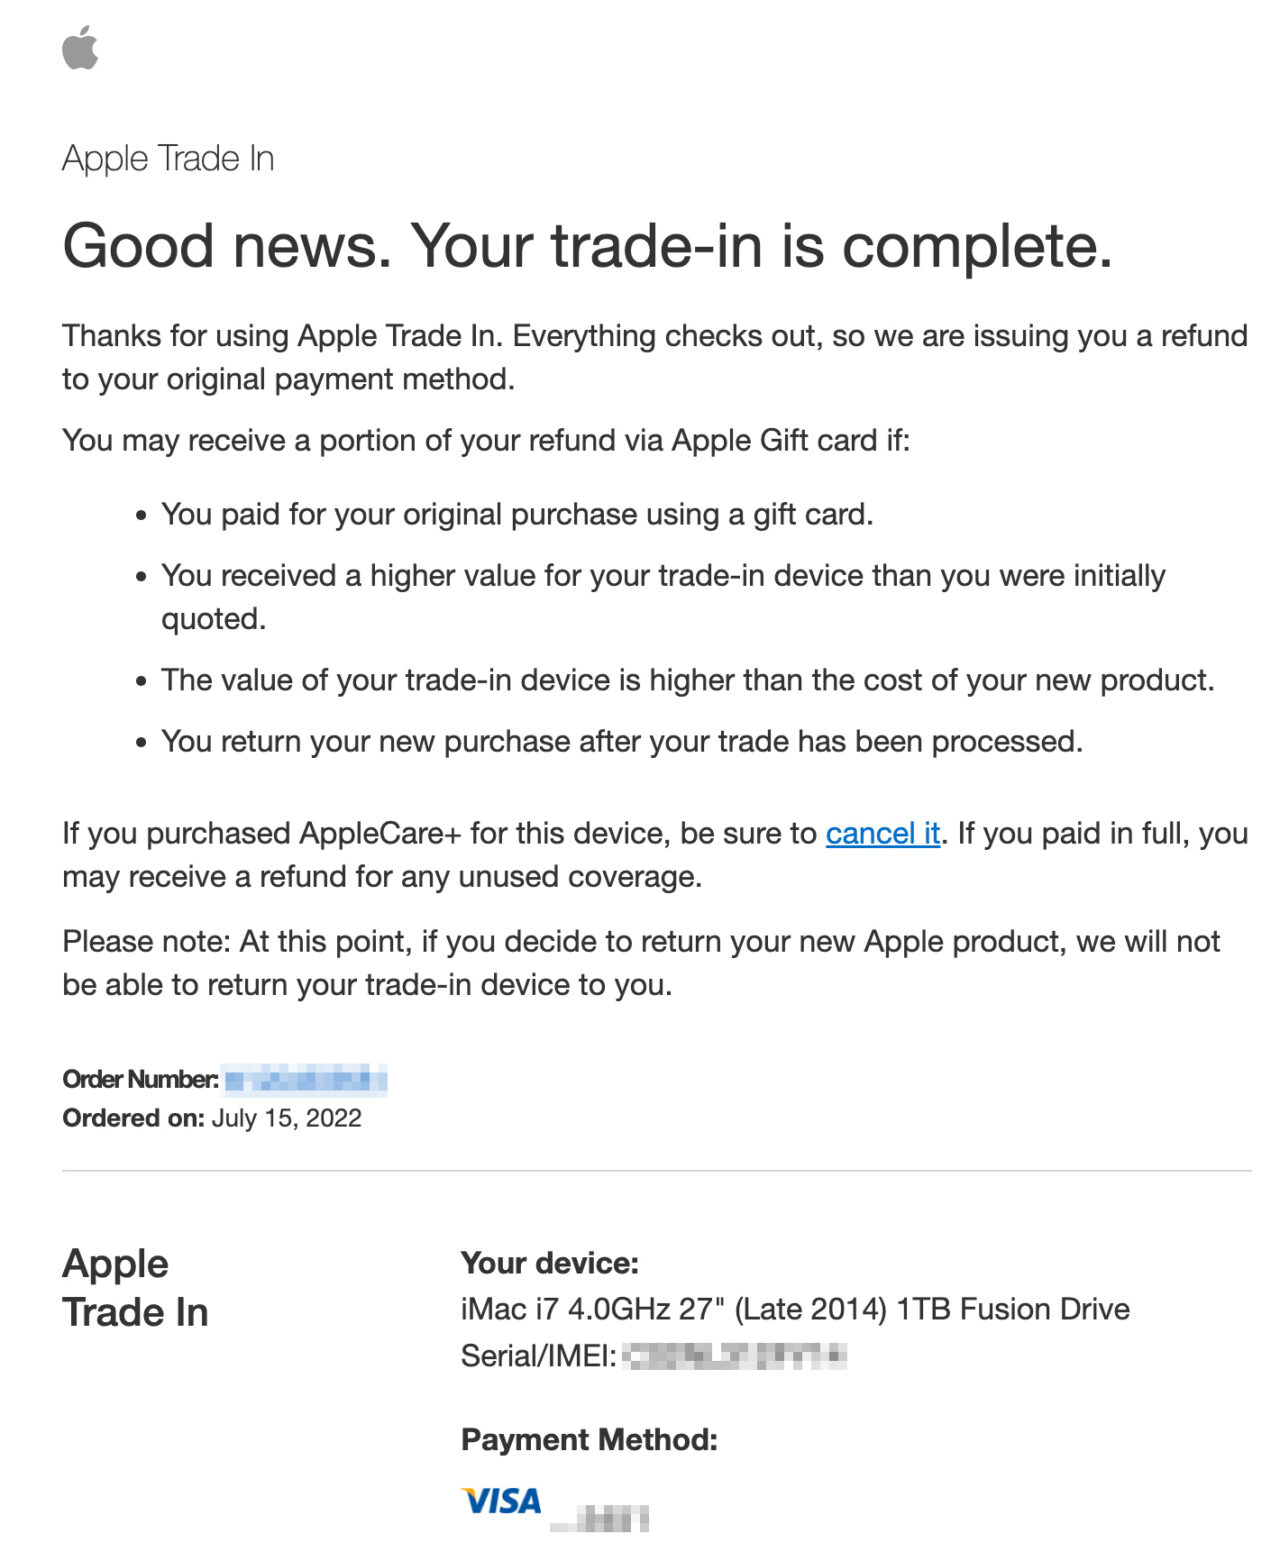 Apple Trade In 完了